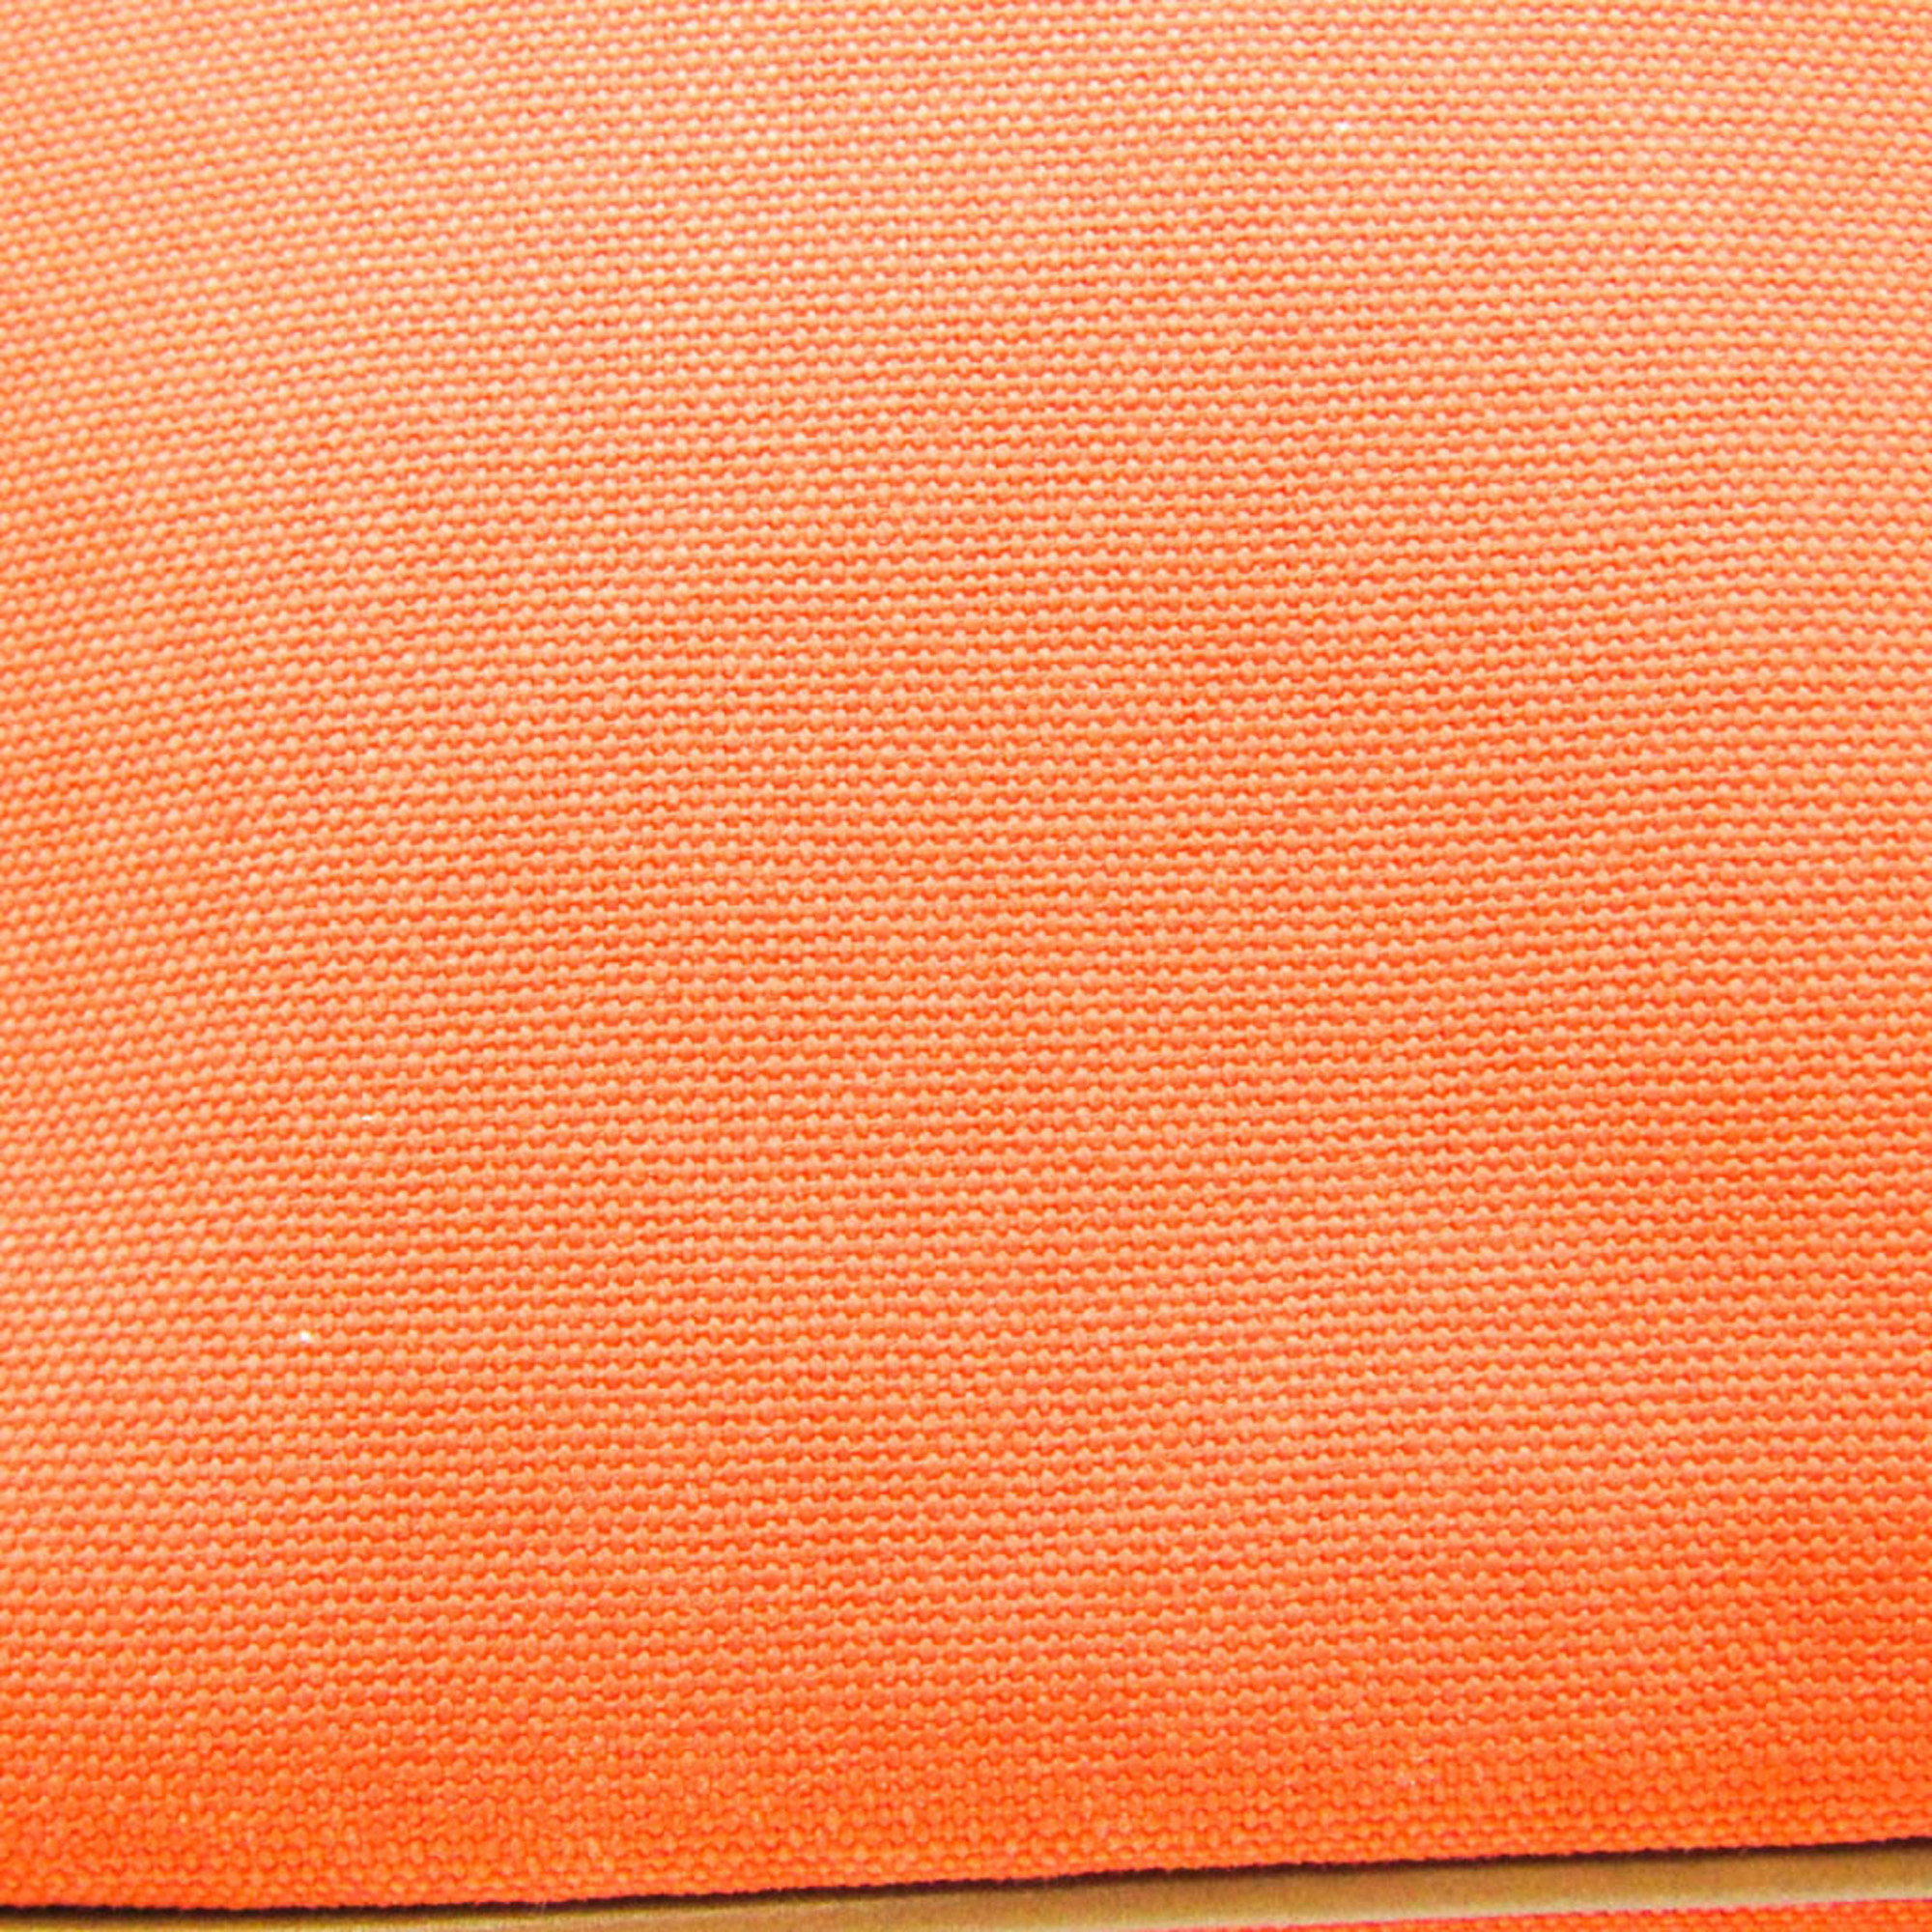 Hermes Bolide MM 103774M Women's Cotton,Leather Pouch Orange